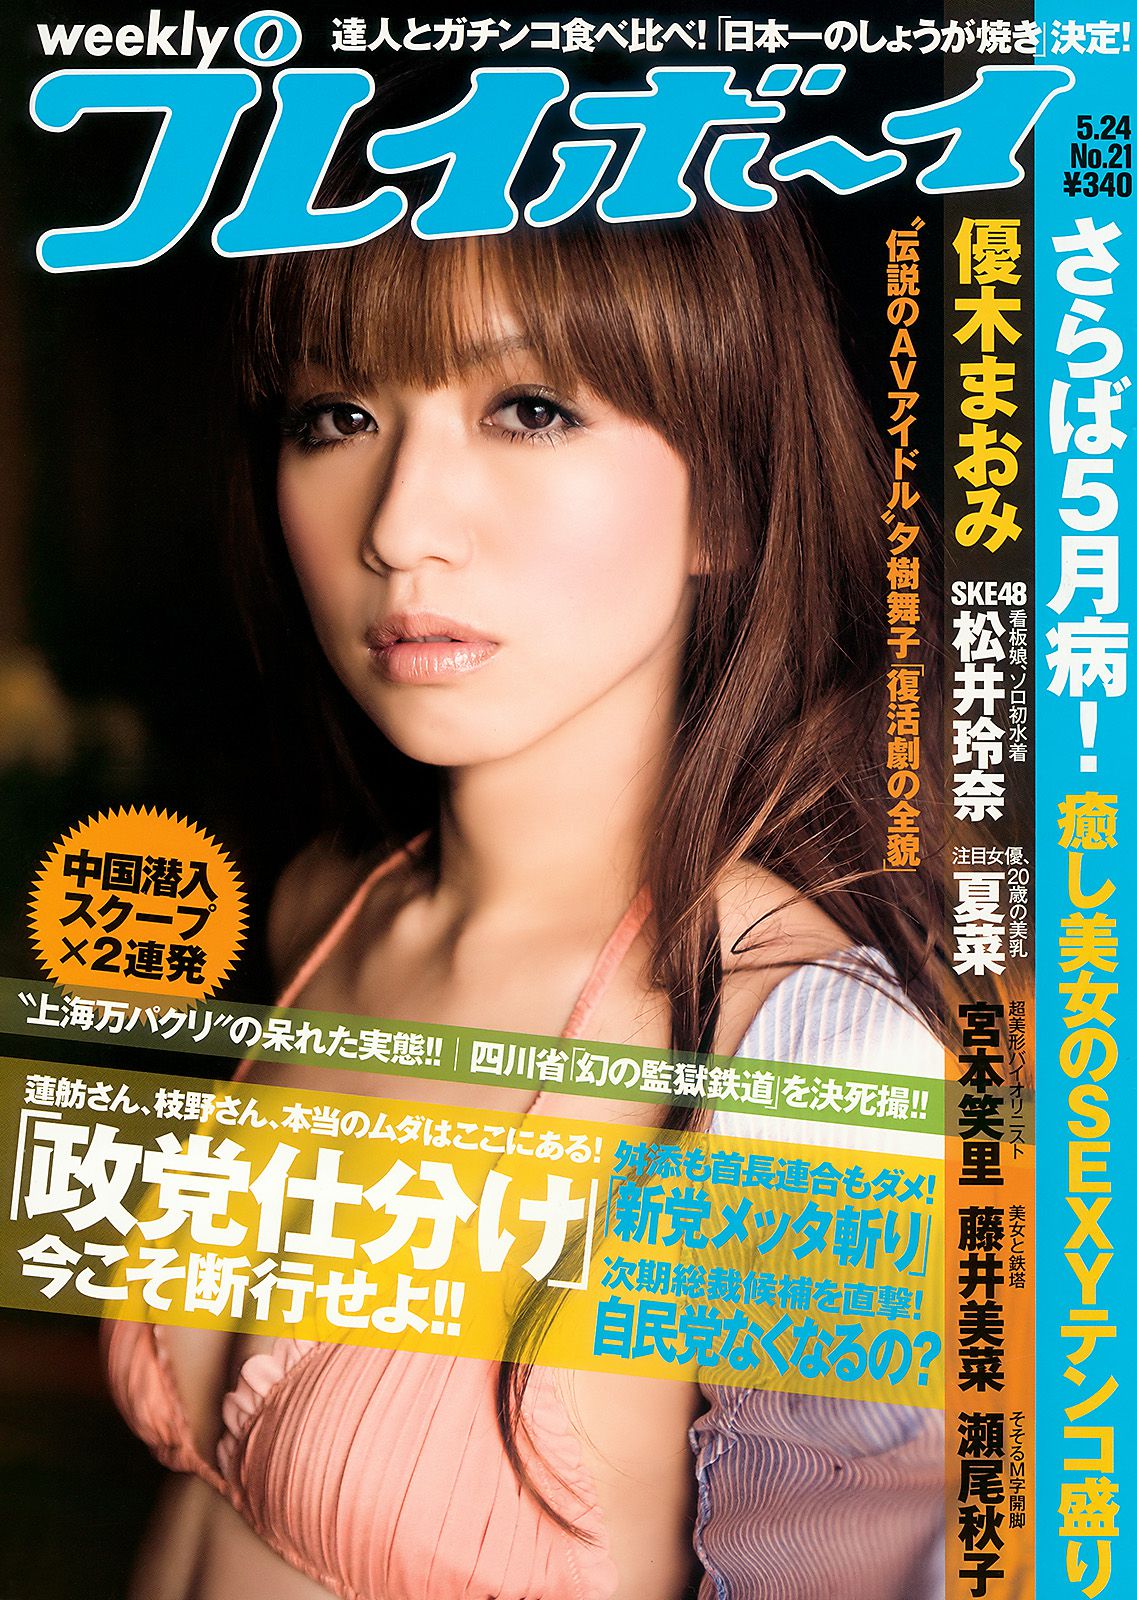 [Weekly Playboy] 2010年No.21 写真杂志